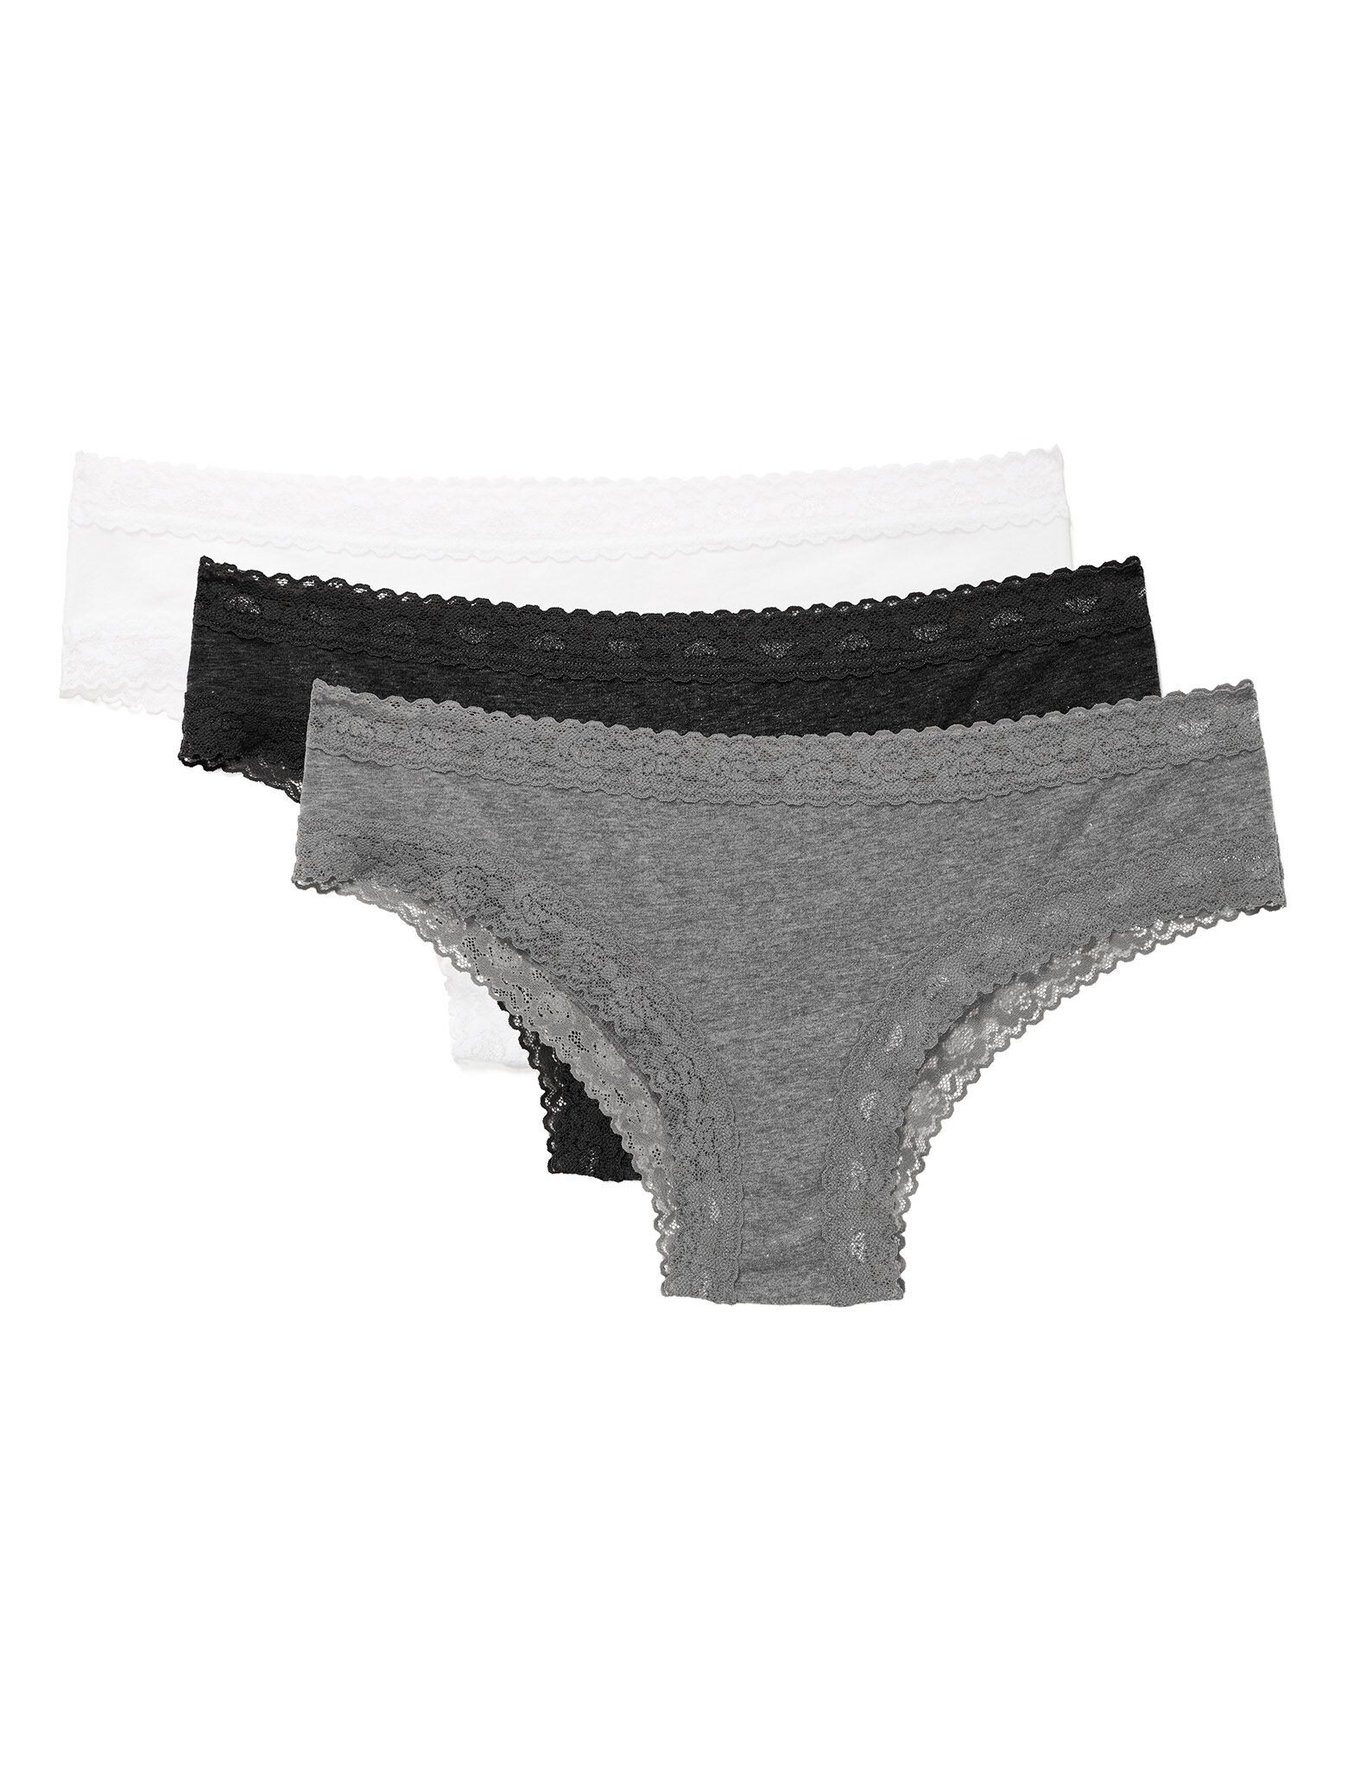 Black Cheeky Panties // #1 Seamless Underwear Brand // EBY™